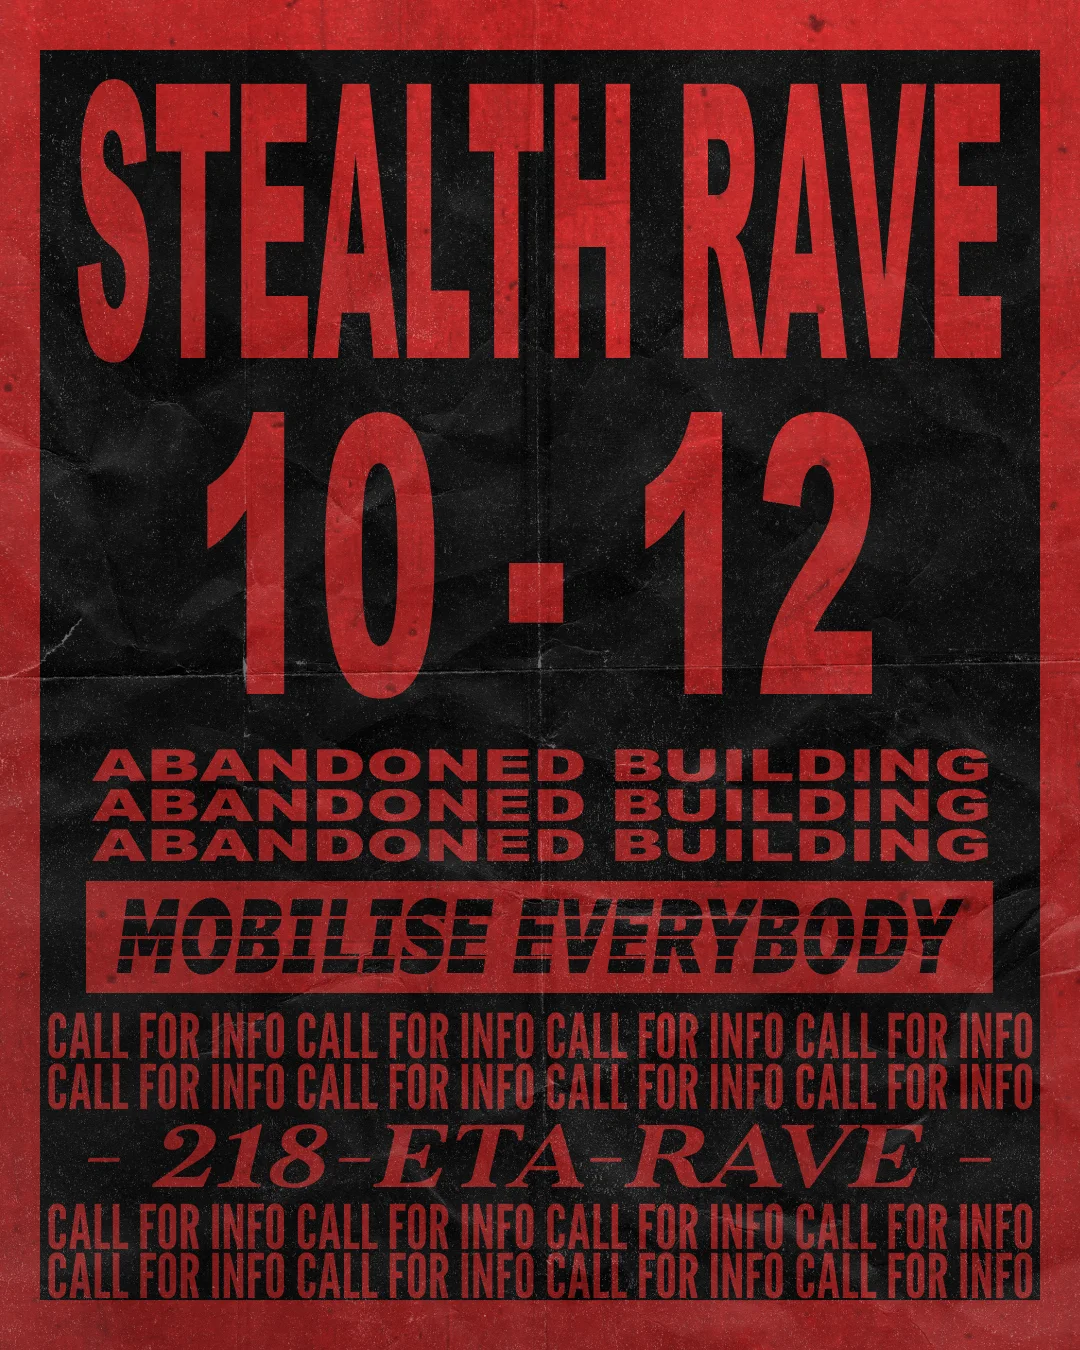 Stealth rave flyer abandoned warehouse rave